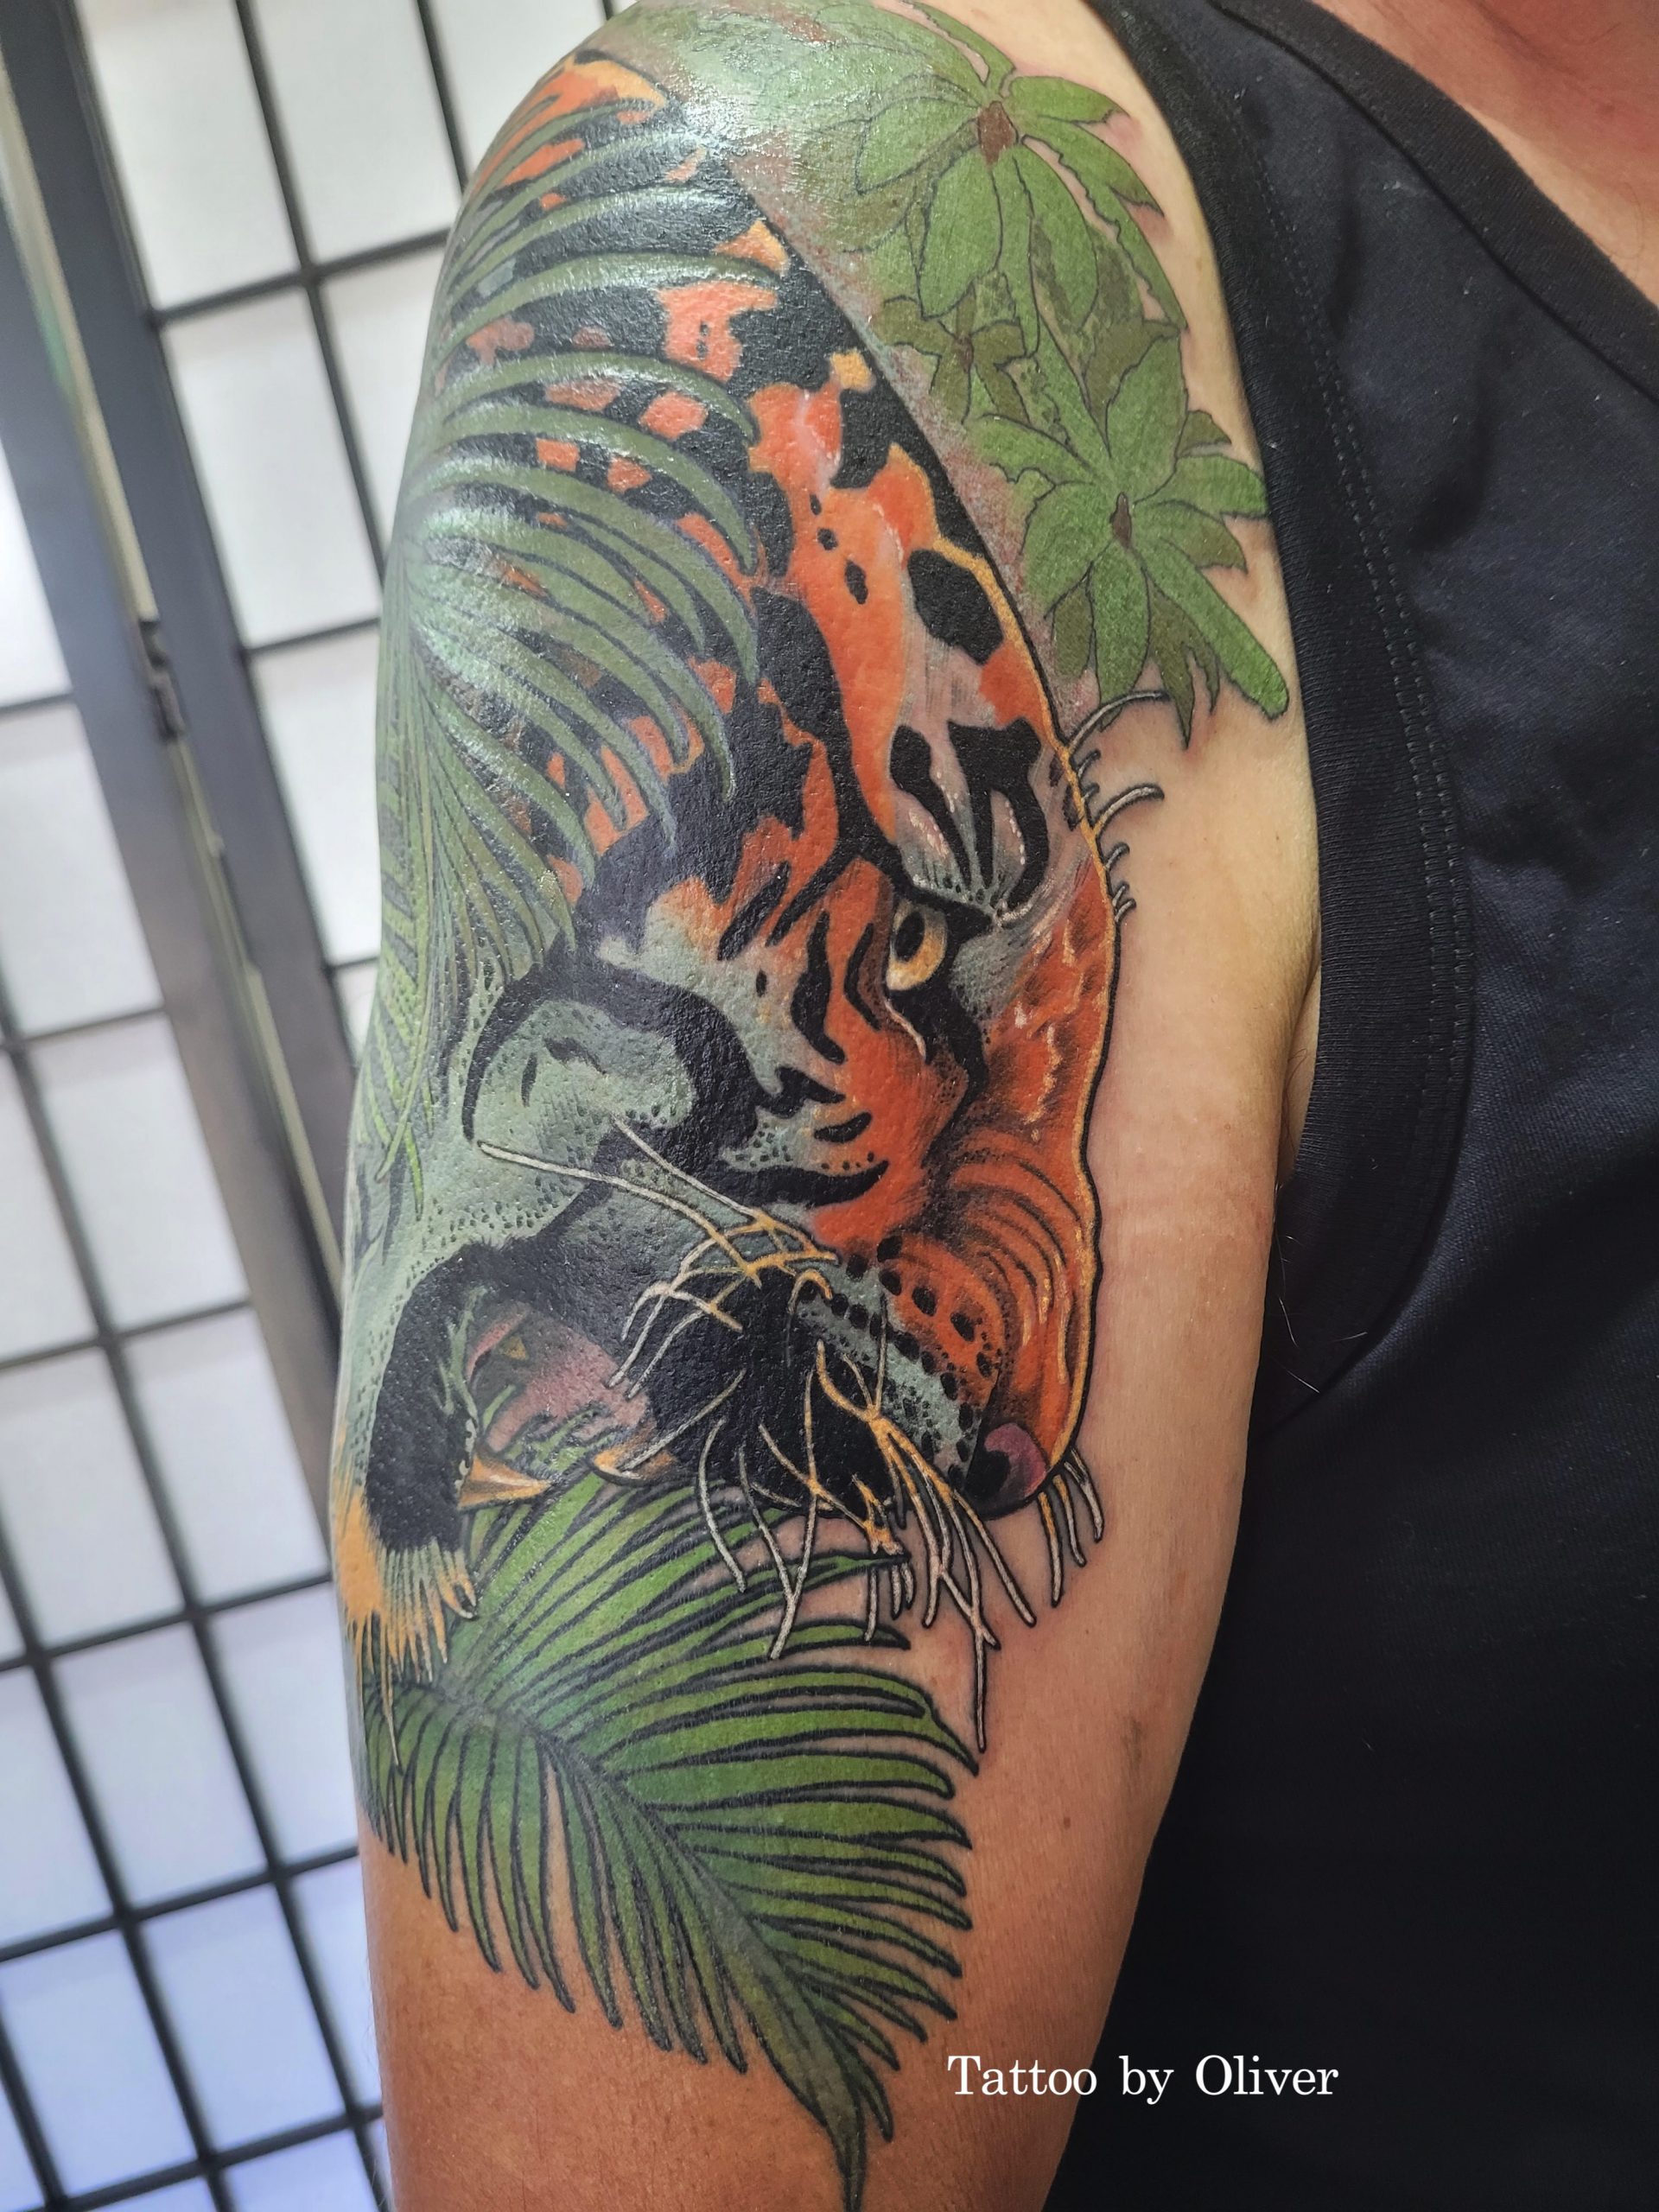 Full Arm Hand Temporary Tattoo For Men, Jungle Birds Flowers Design For  Girls Women, Tattoo Sticker